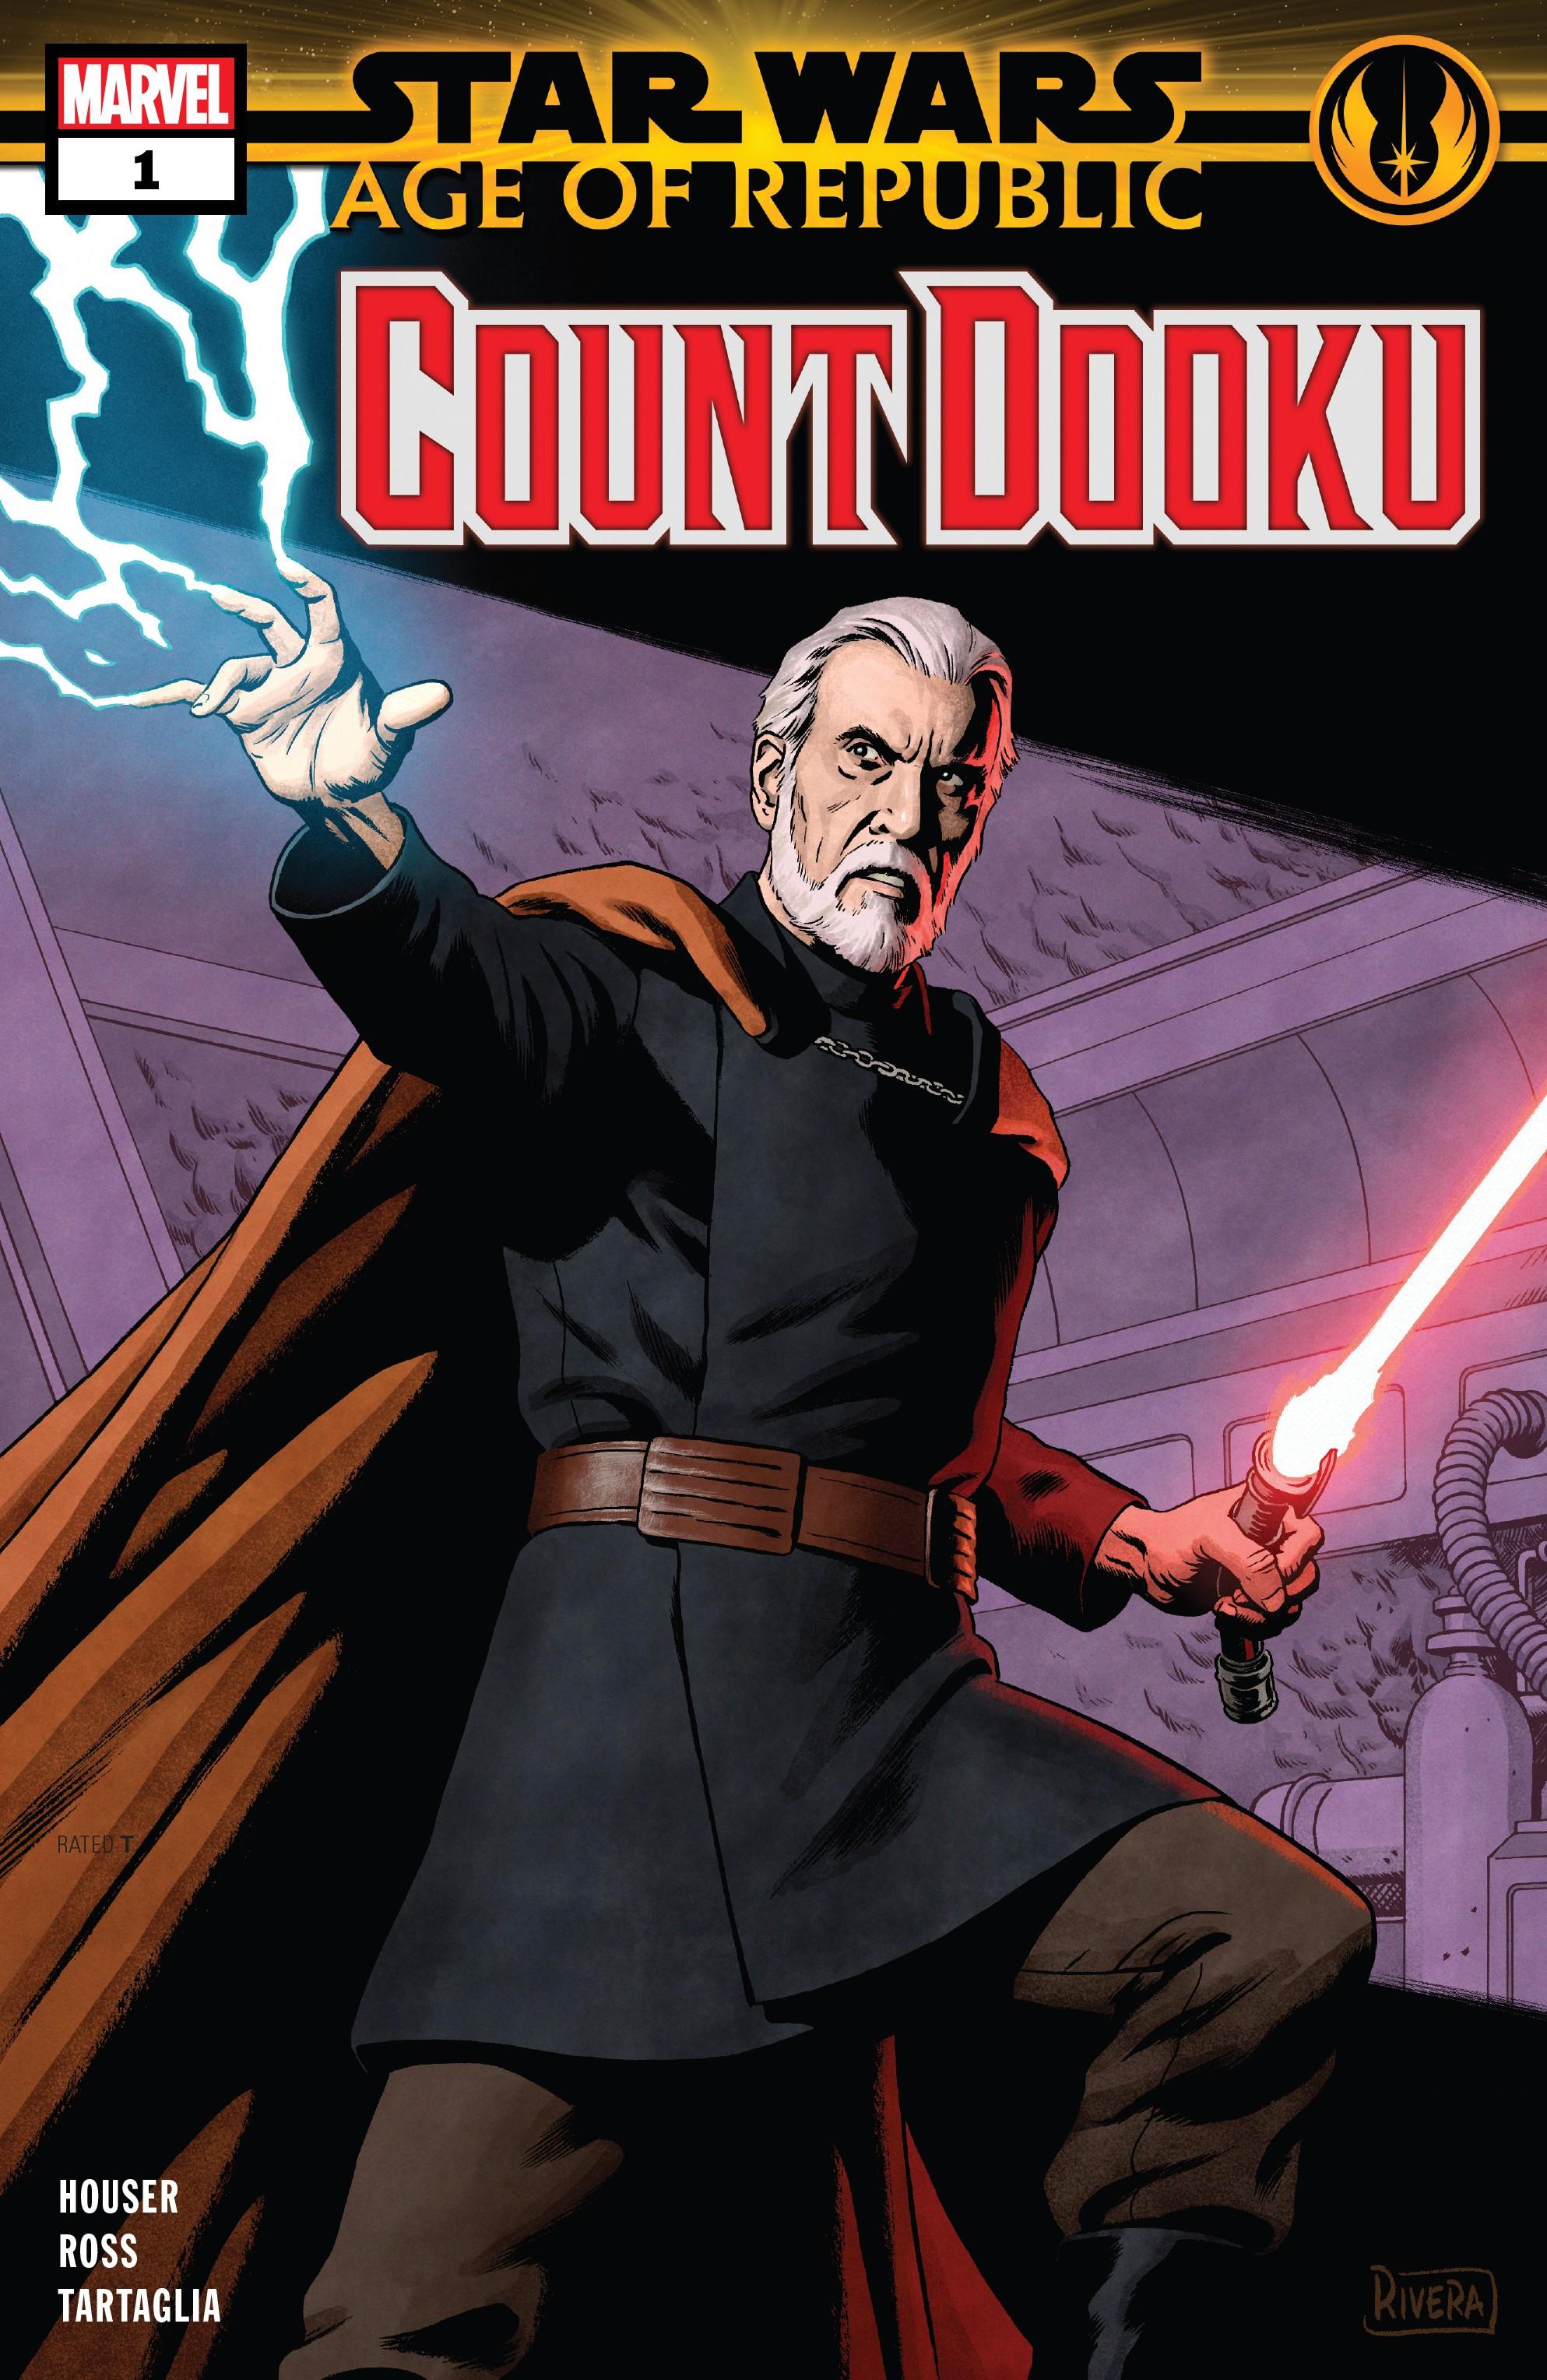 Star Wars: Age of Republic - Count Dooku Vol. 1 #1